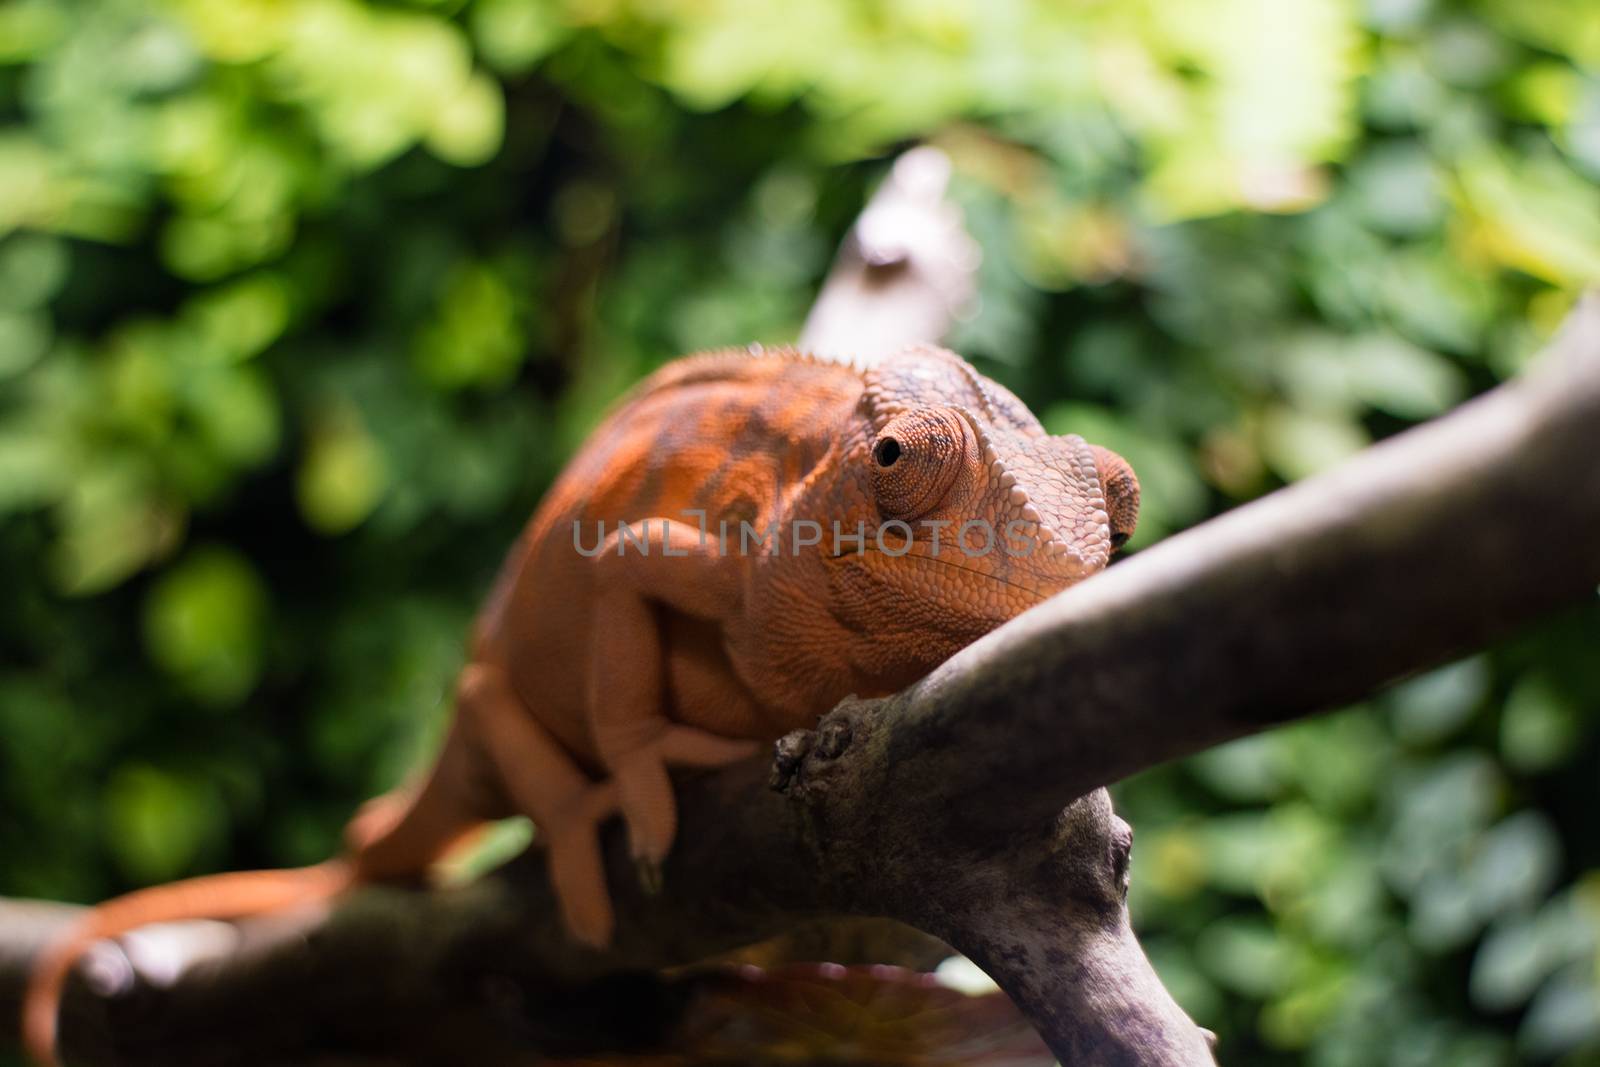 Orange chameleon sitting on plant stalk in Zoo.